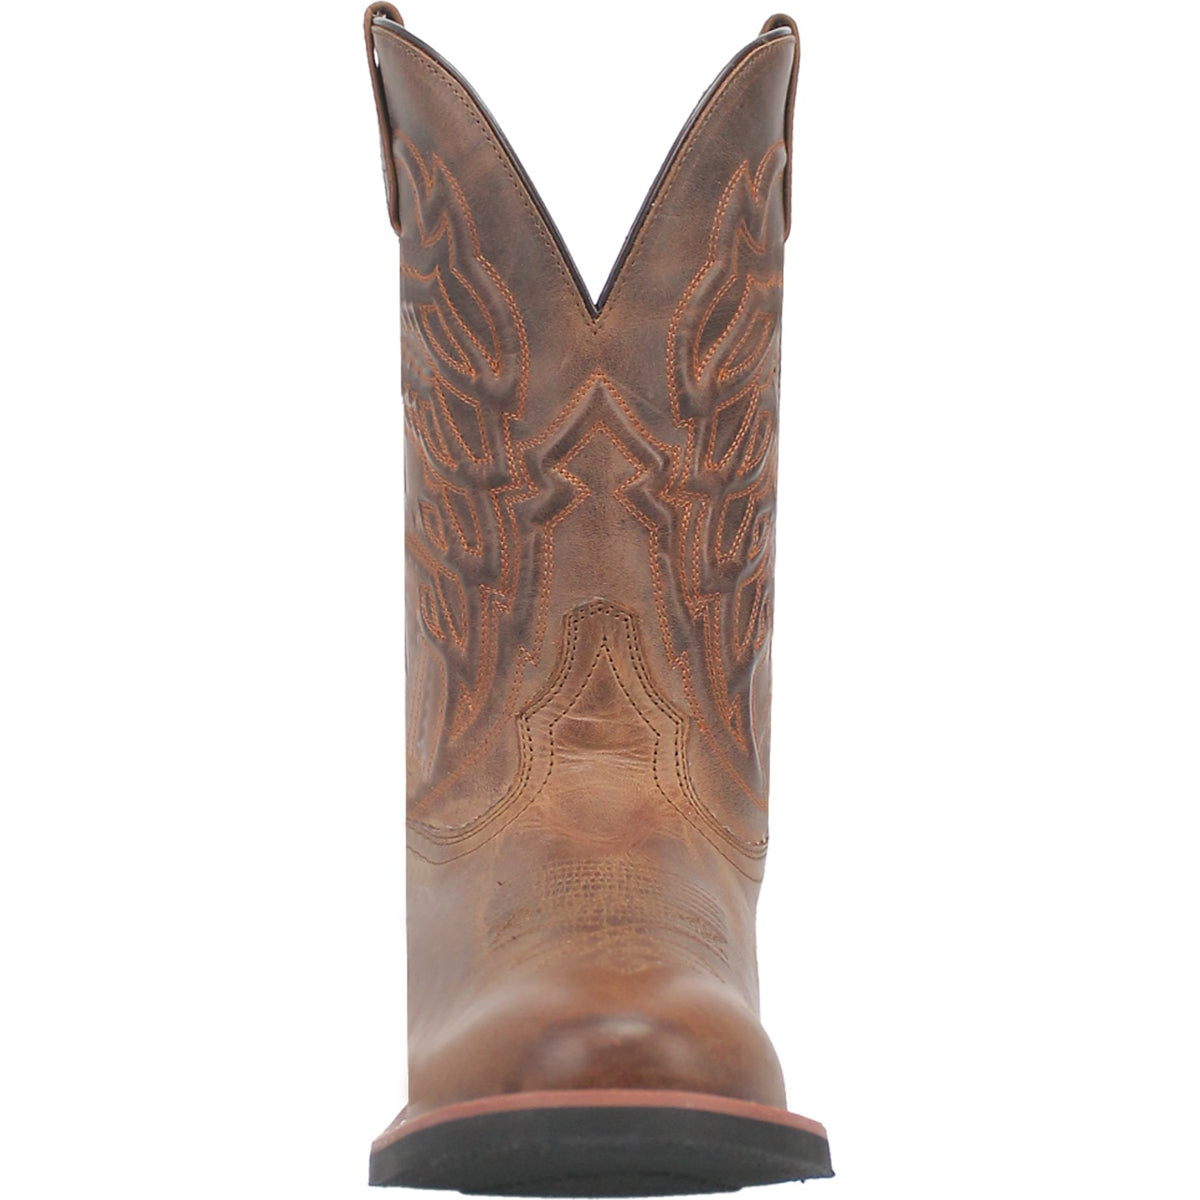 Laredo Men's (62074) 7 Antique Brown Leather Side Zip Dress or Work Boot –  Pete's Town Western Wear